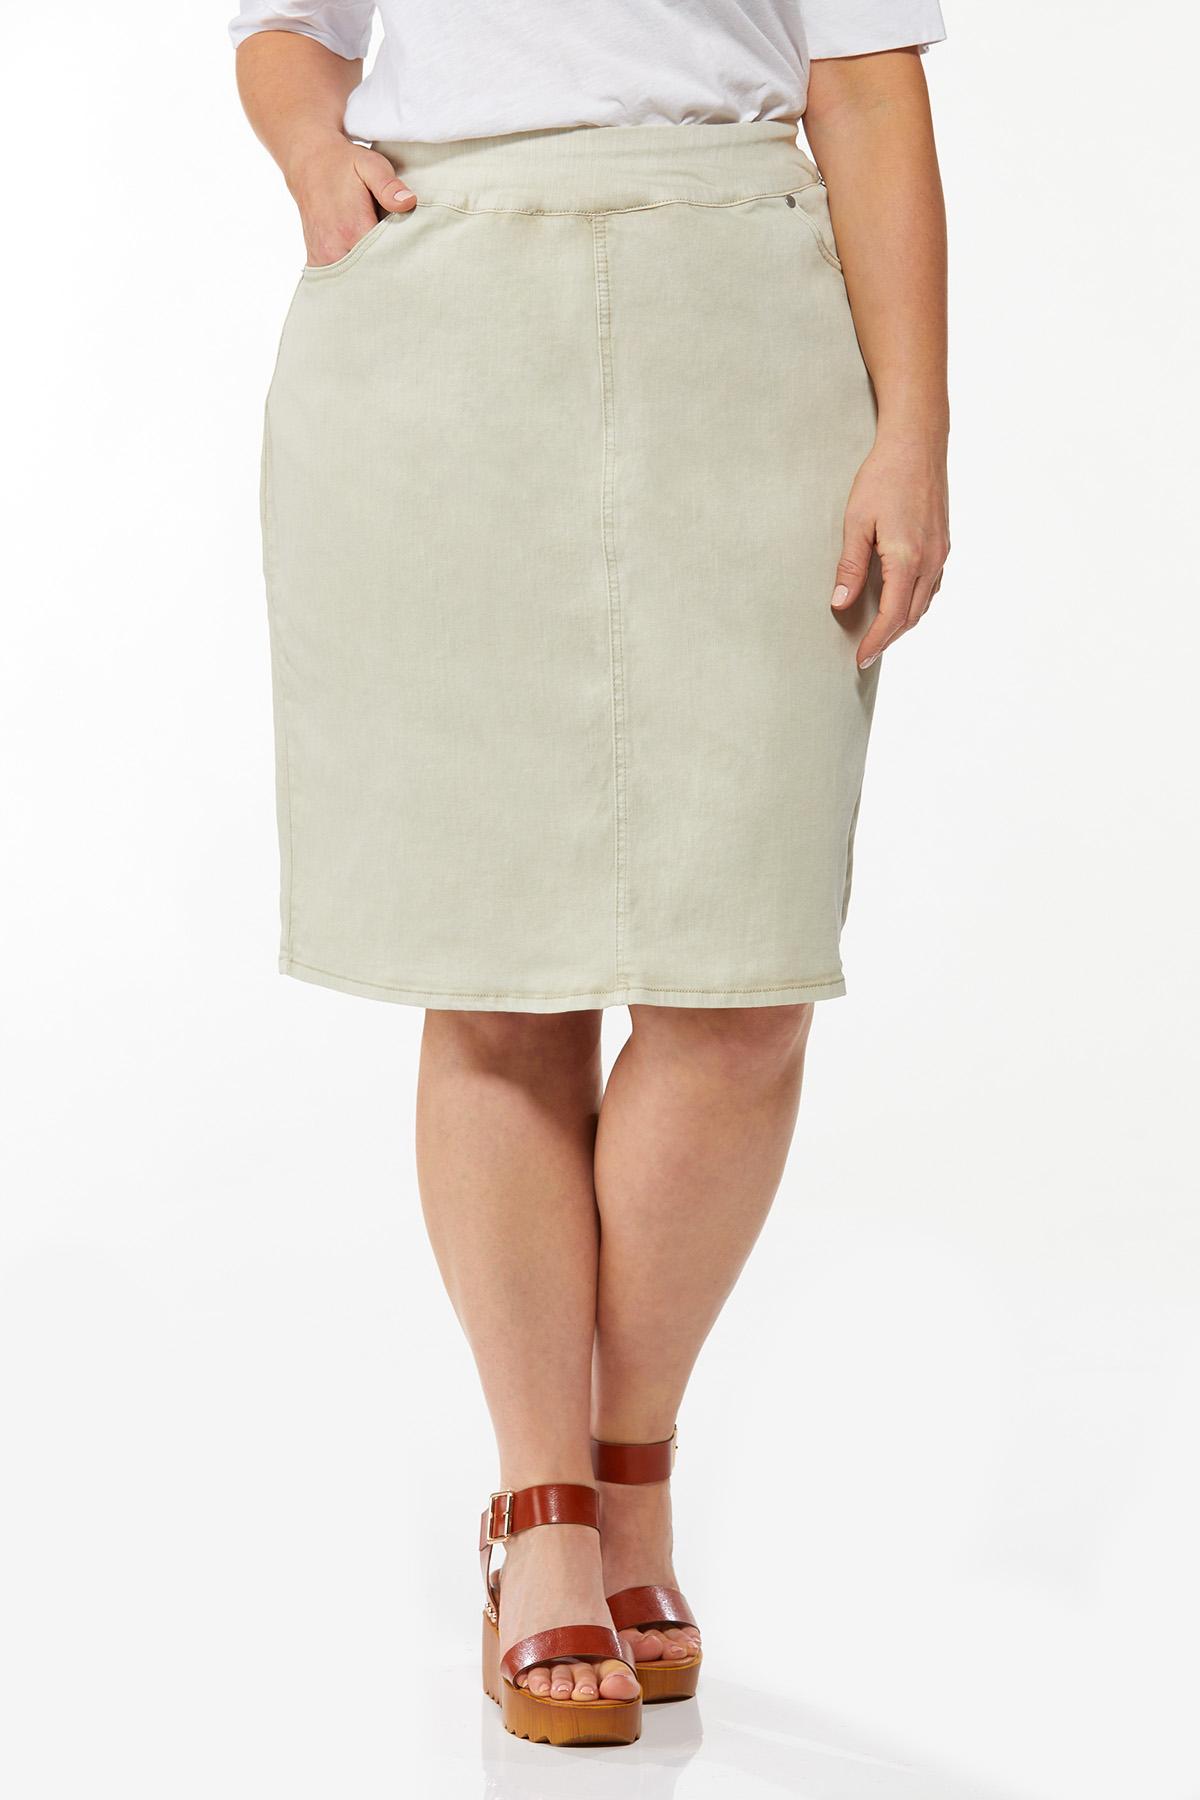 Plus Size Khaki Denim Skirt